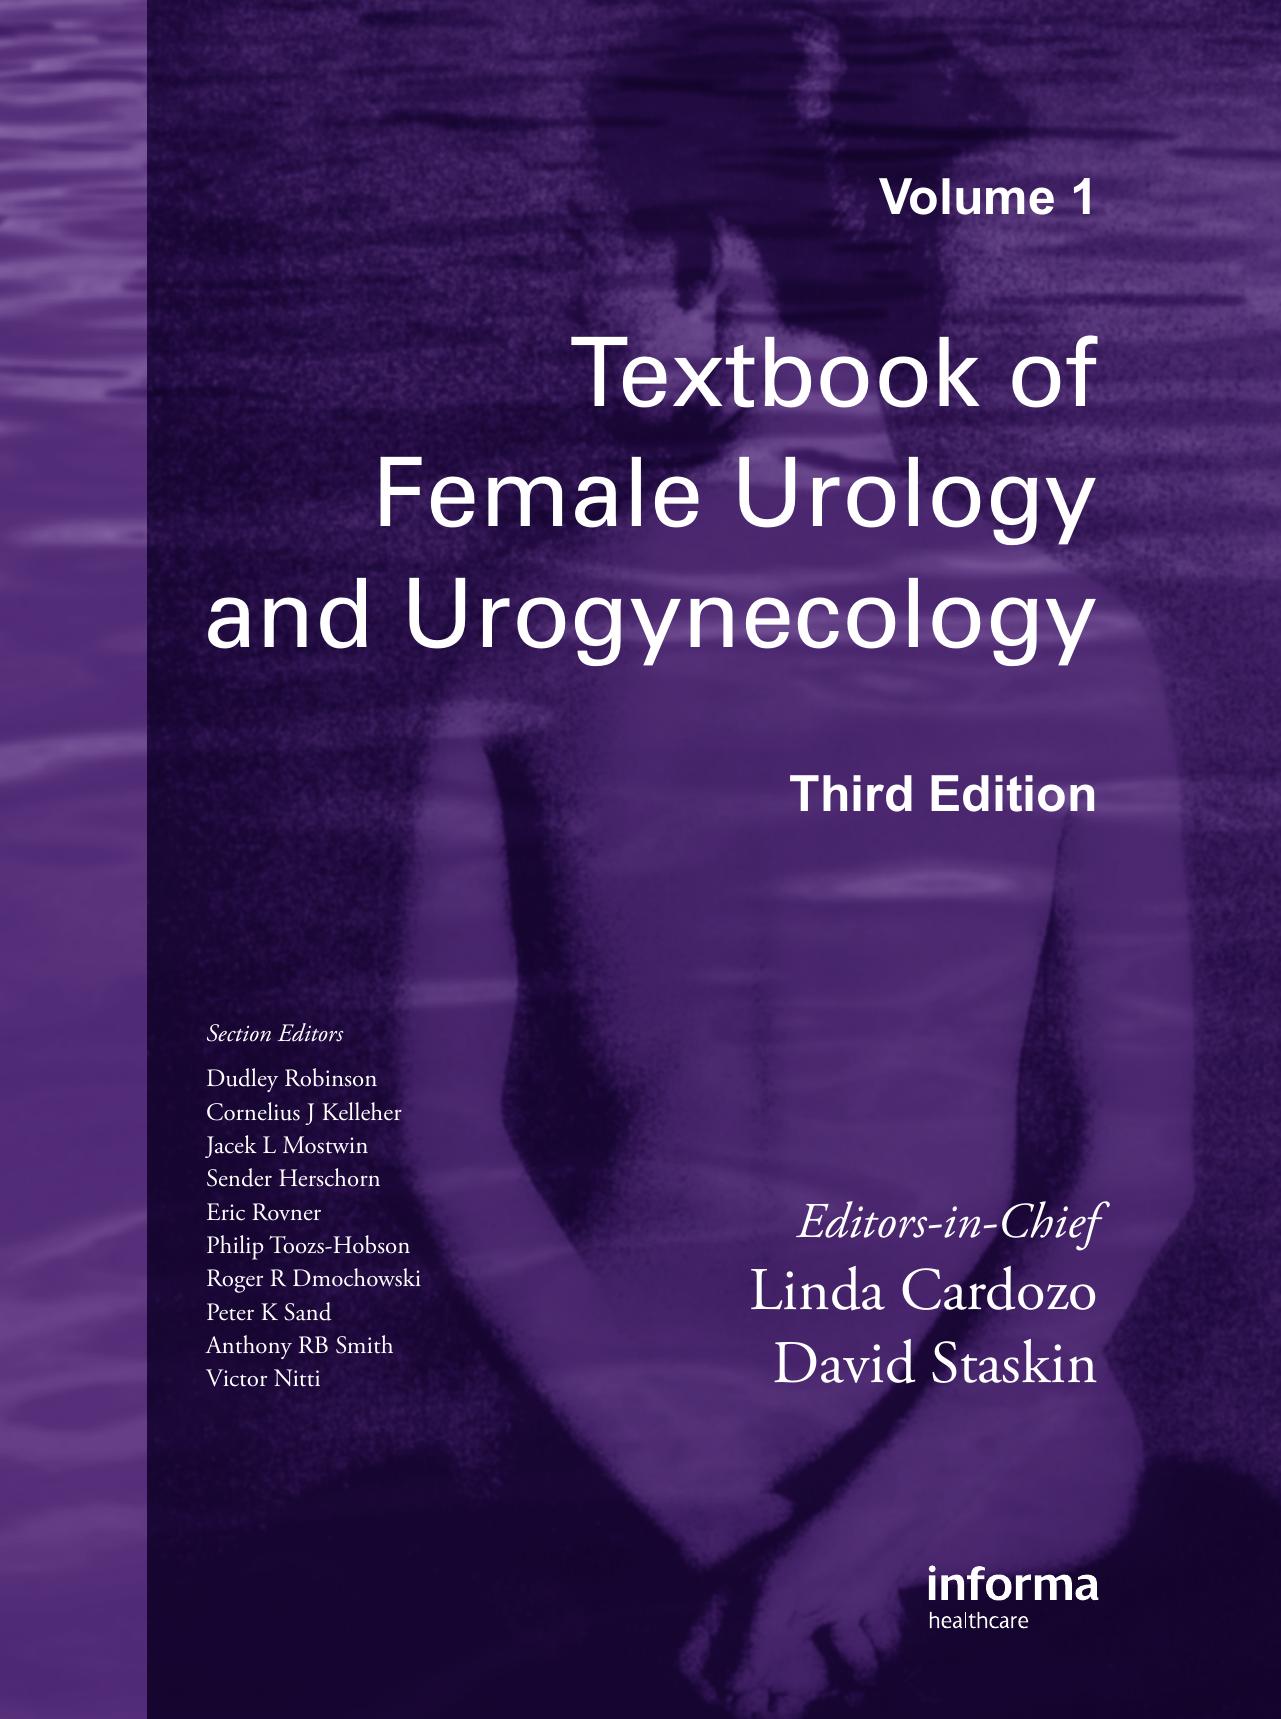 Textbook of Female Urology and Urogynecology, 3rd Edition.jpg